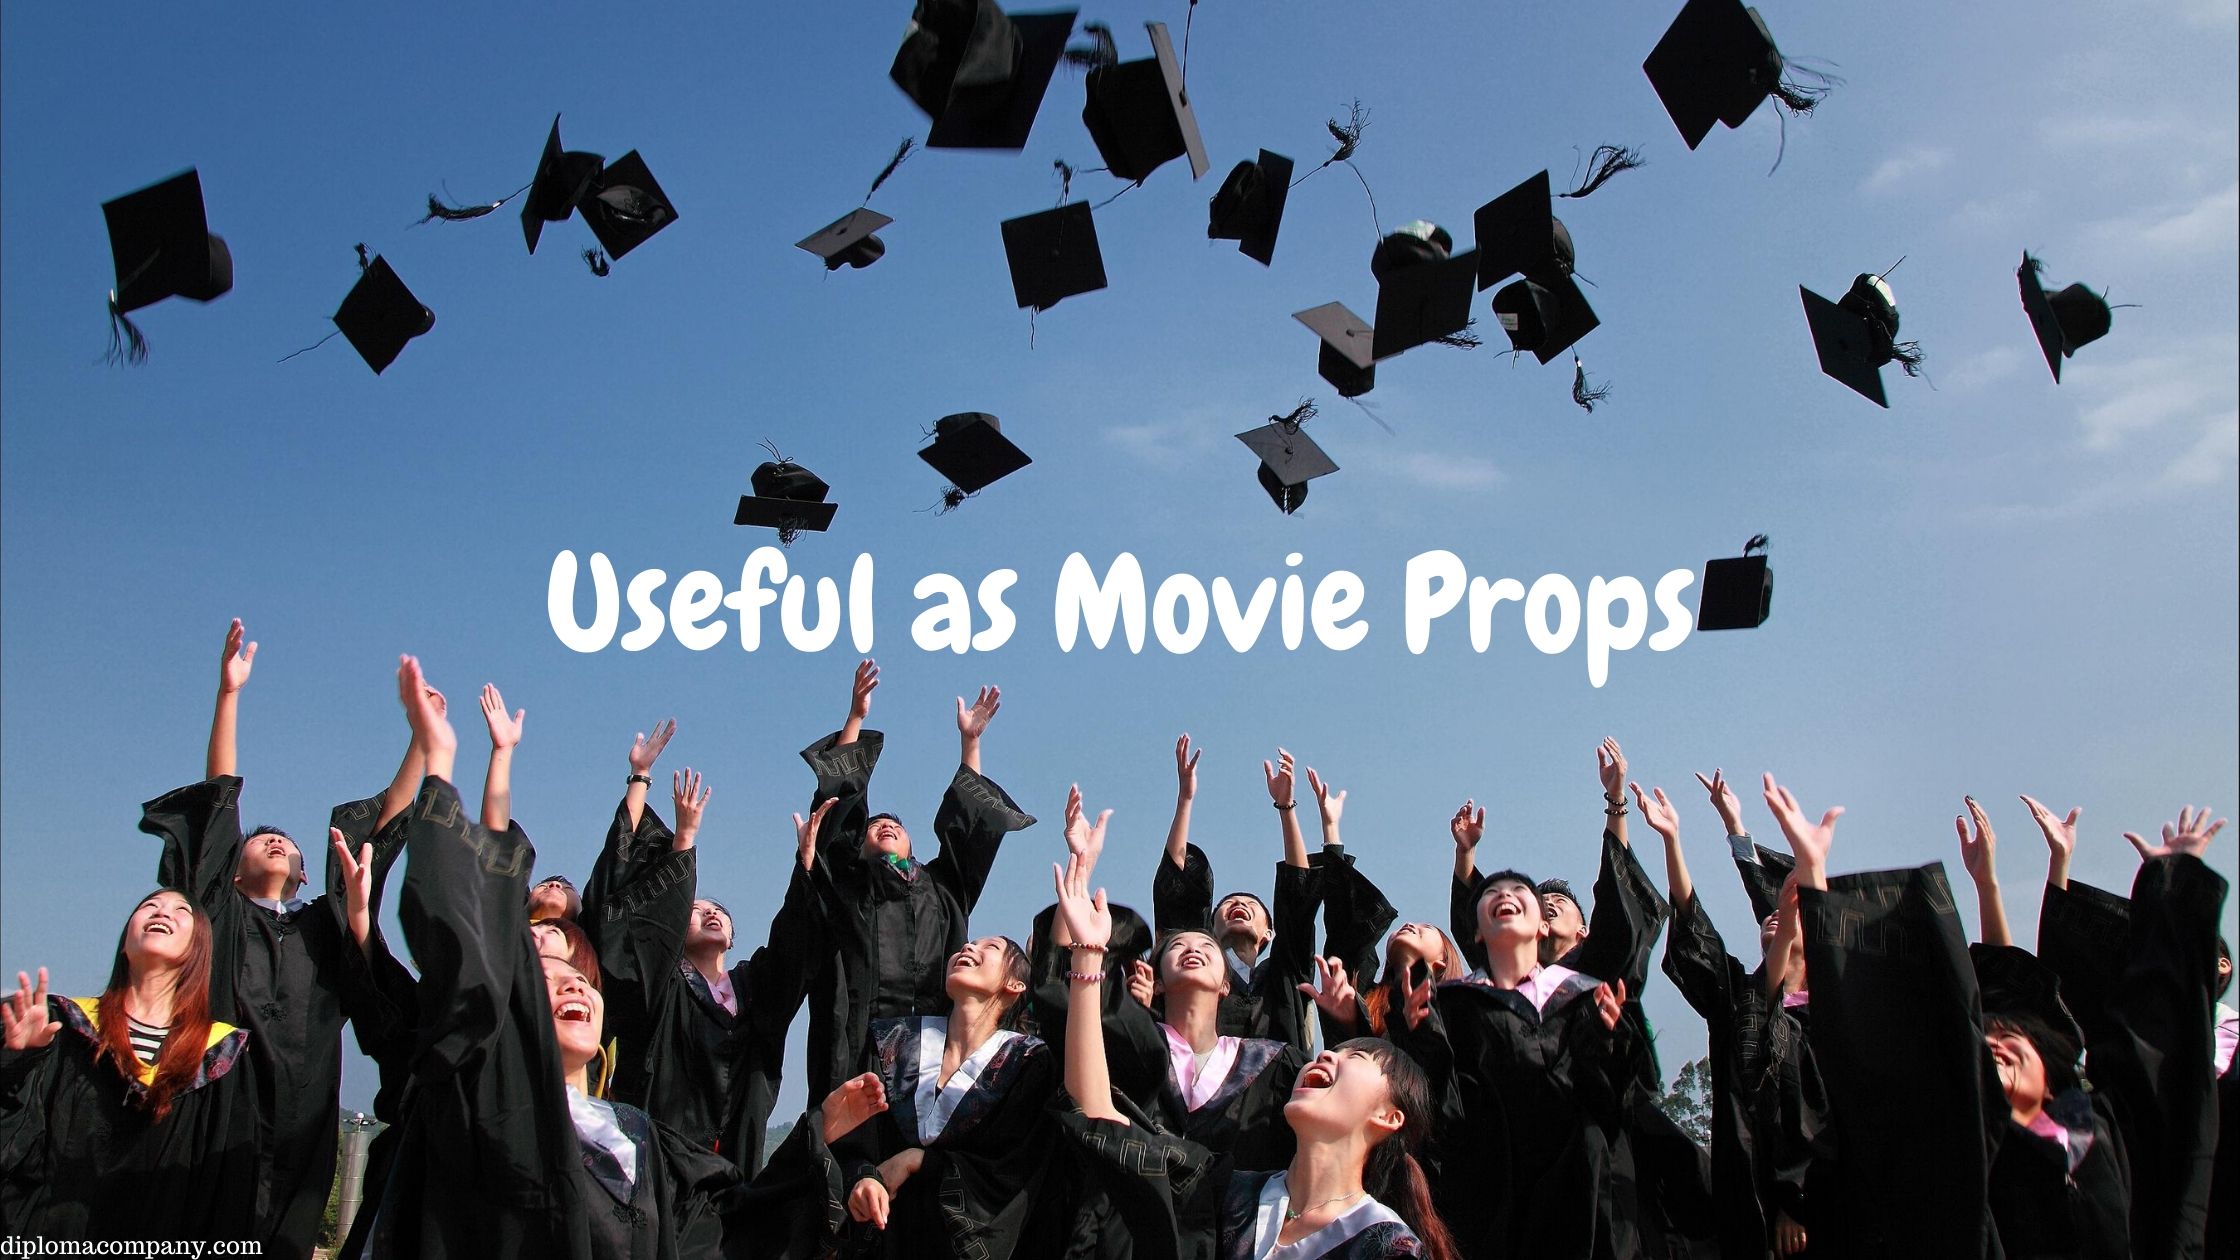 phony diploma as movie prop